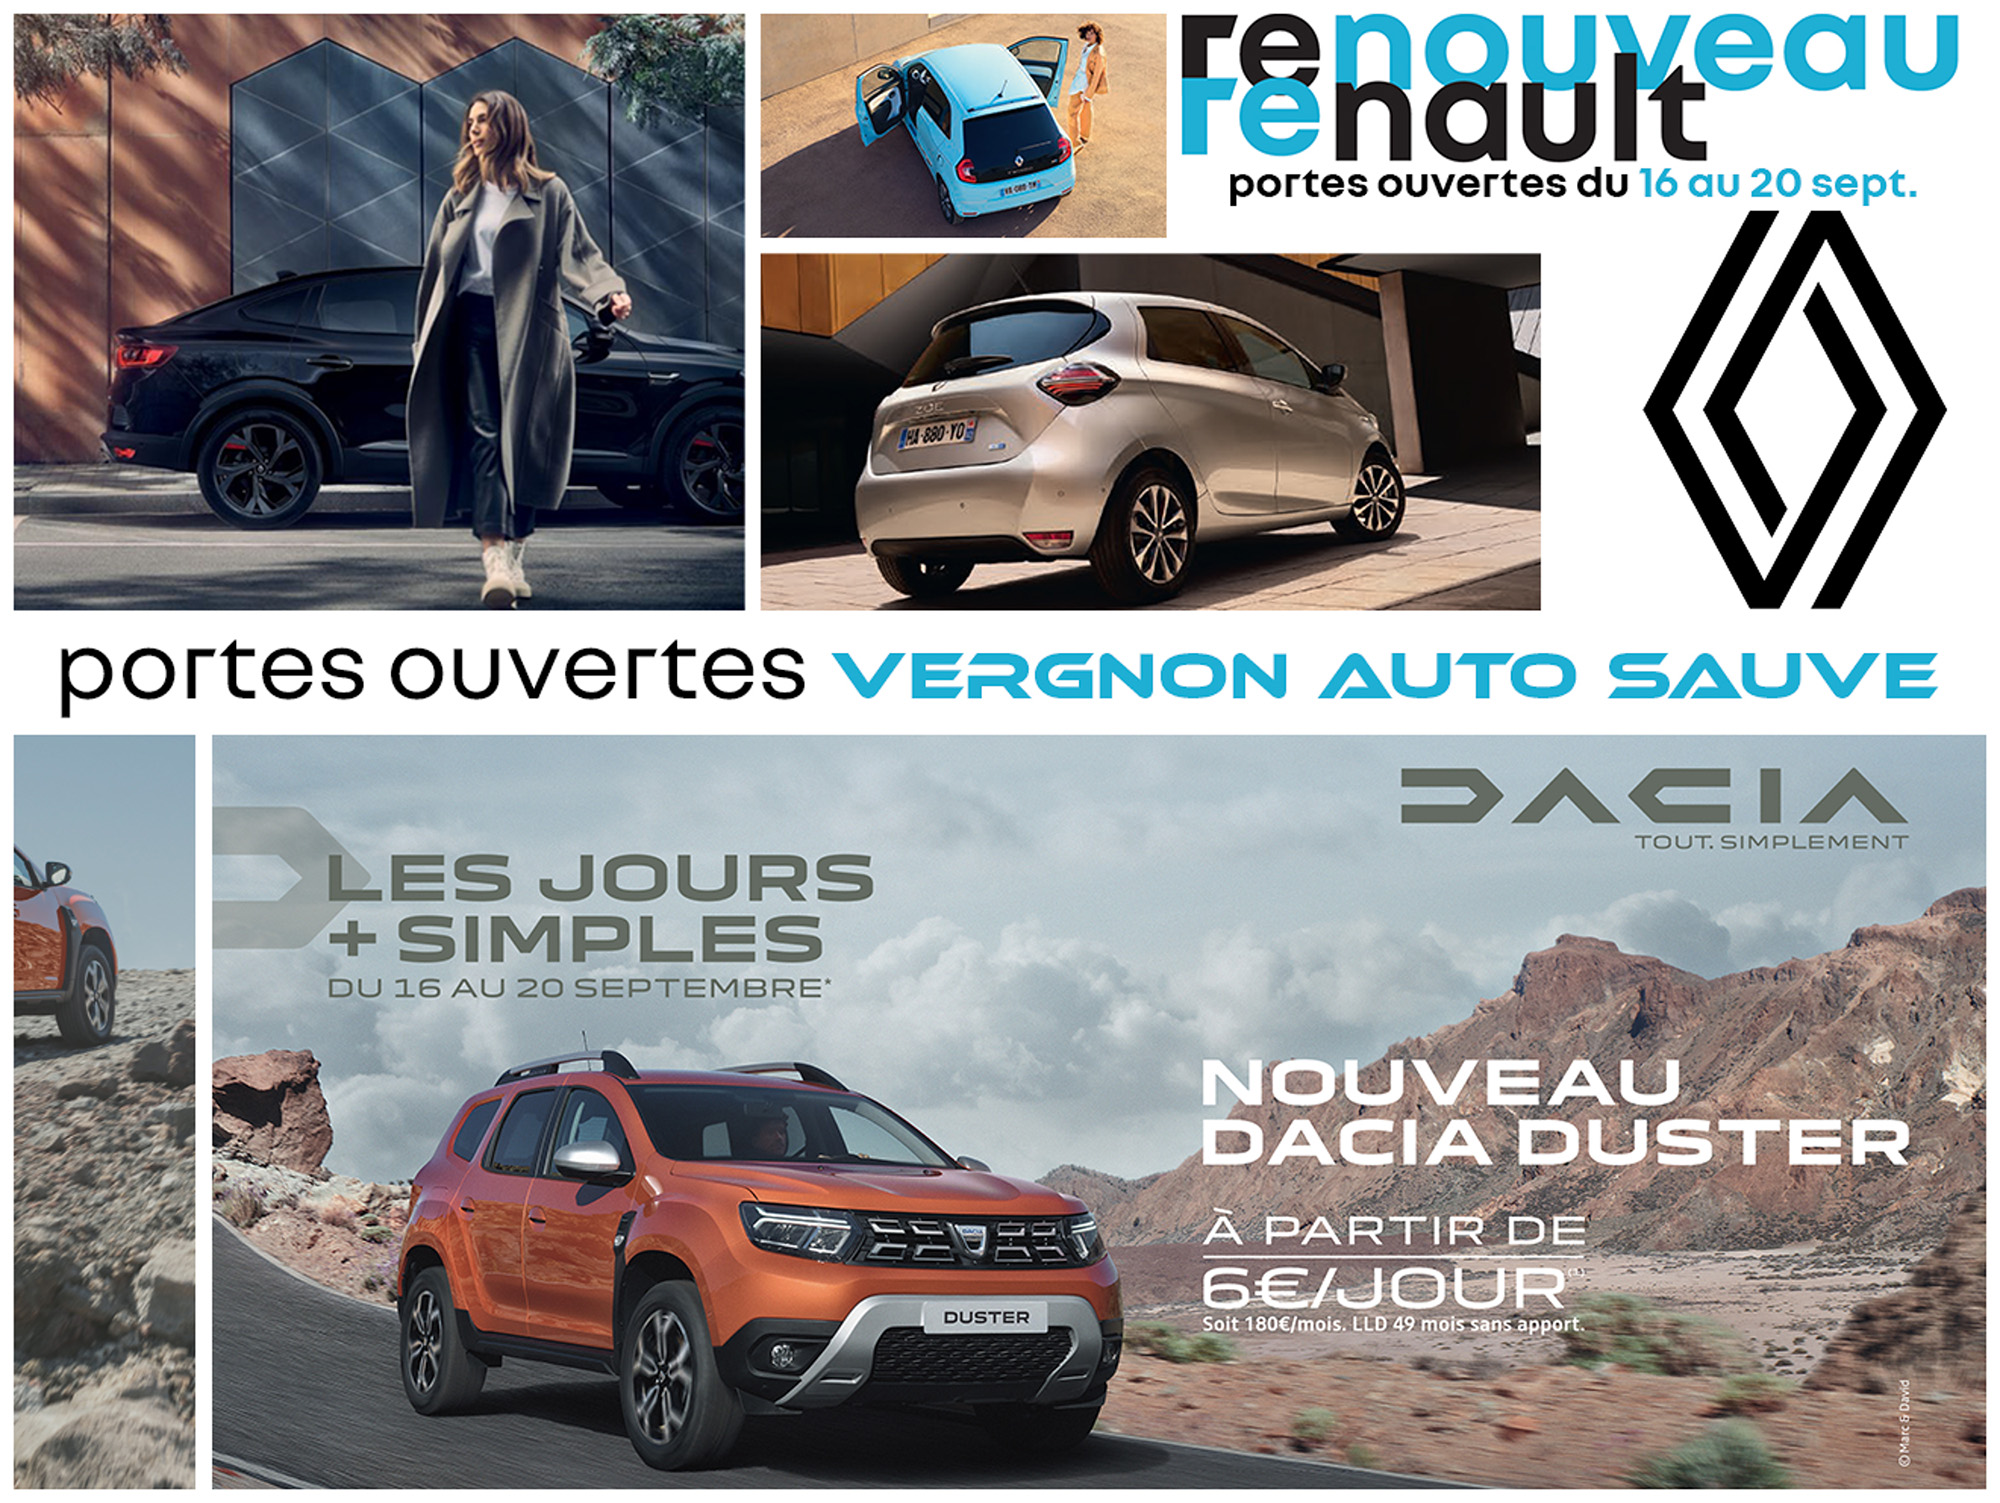 Portes ouvertes « Renault-Dacia » Sauve !